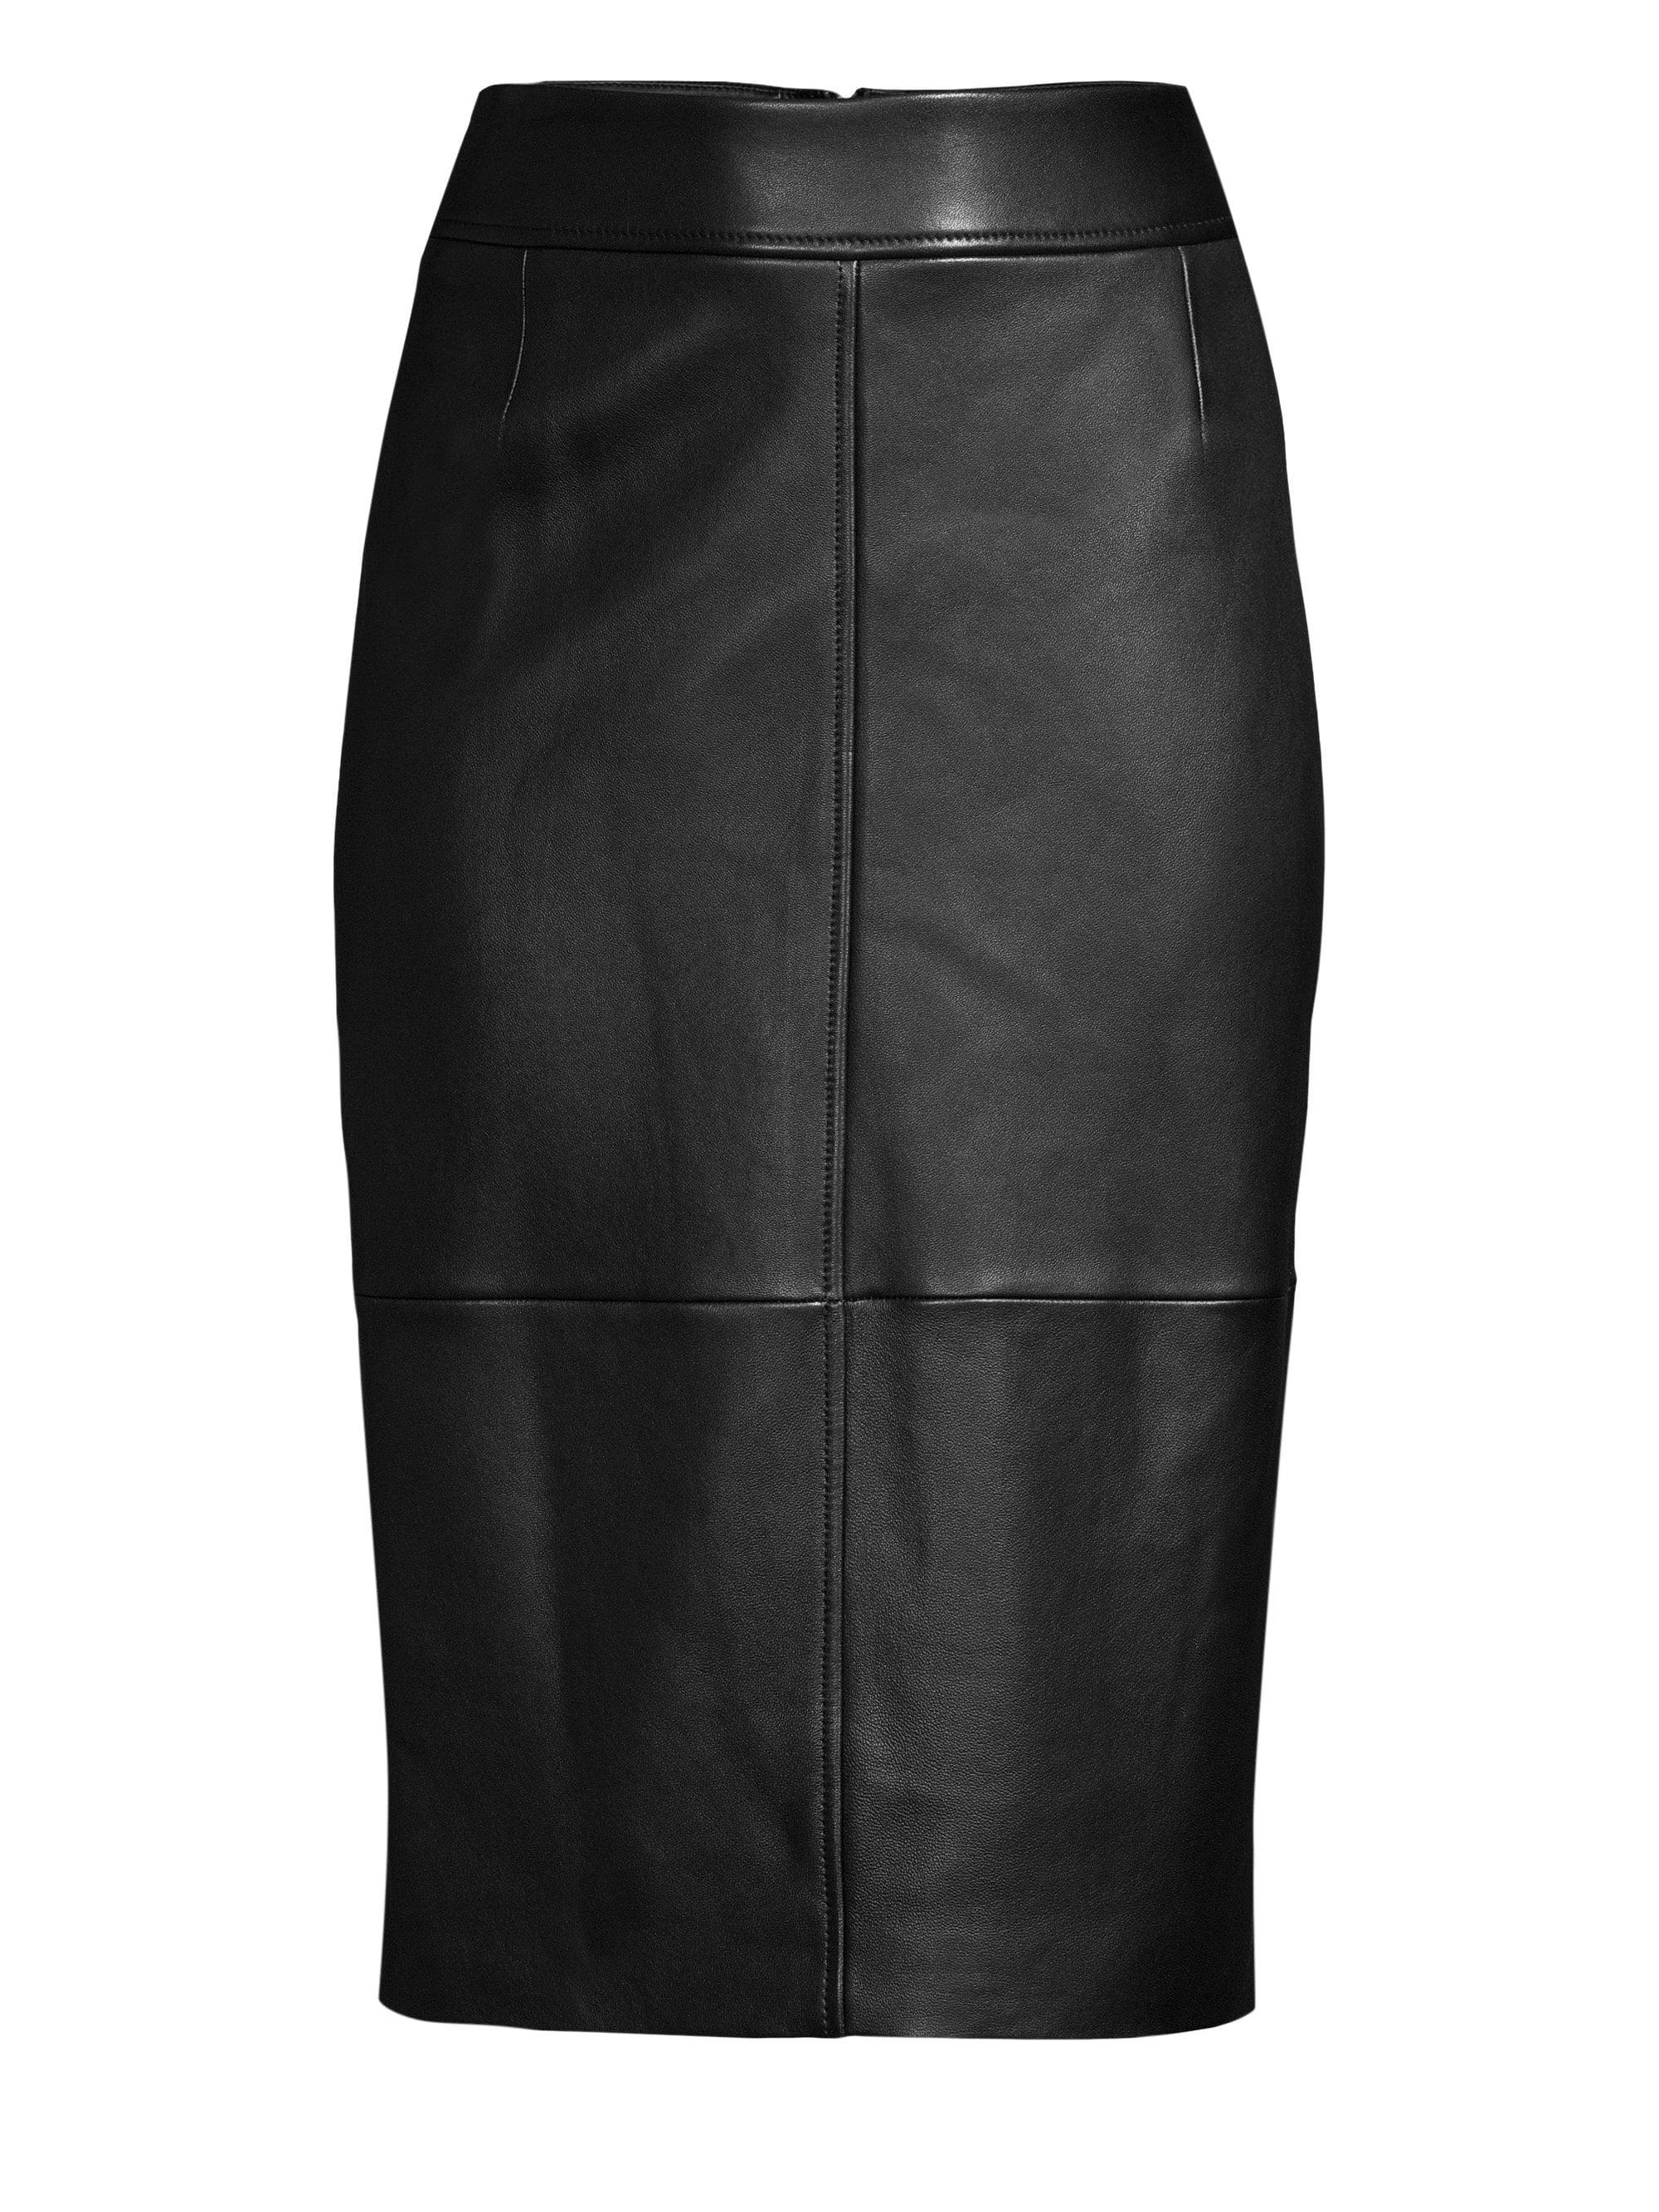 Hugo Boss Selrita Leather Pencil Skirt 